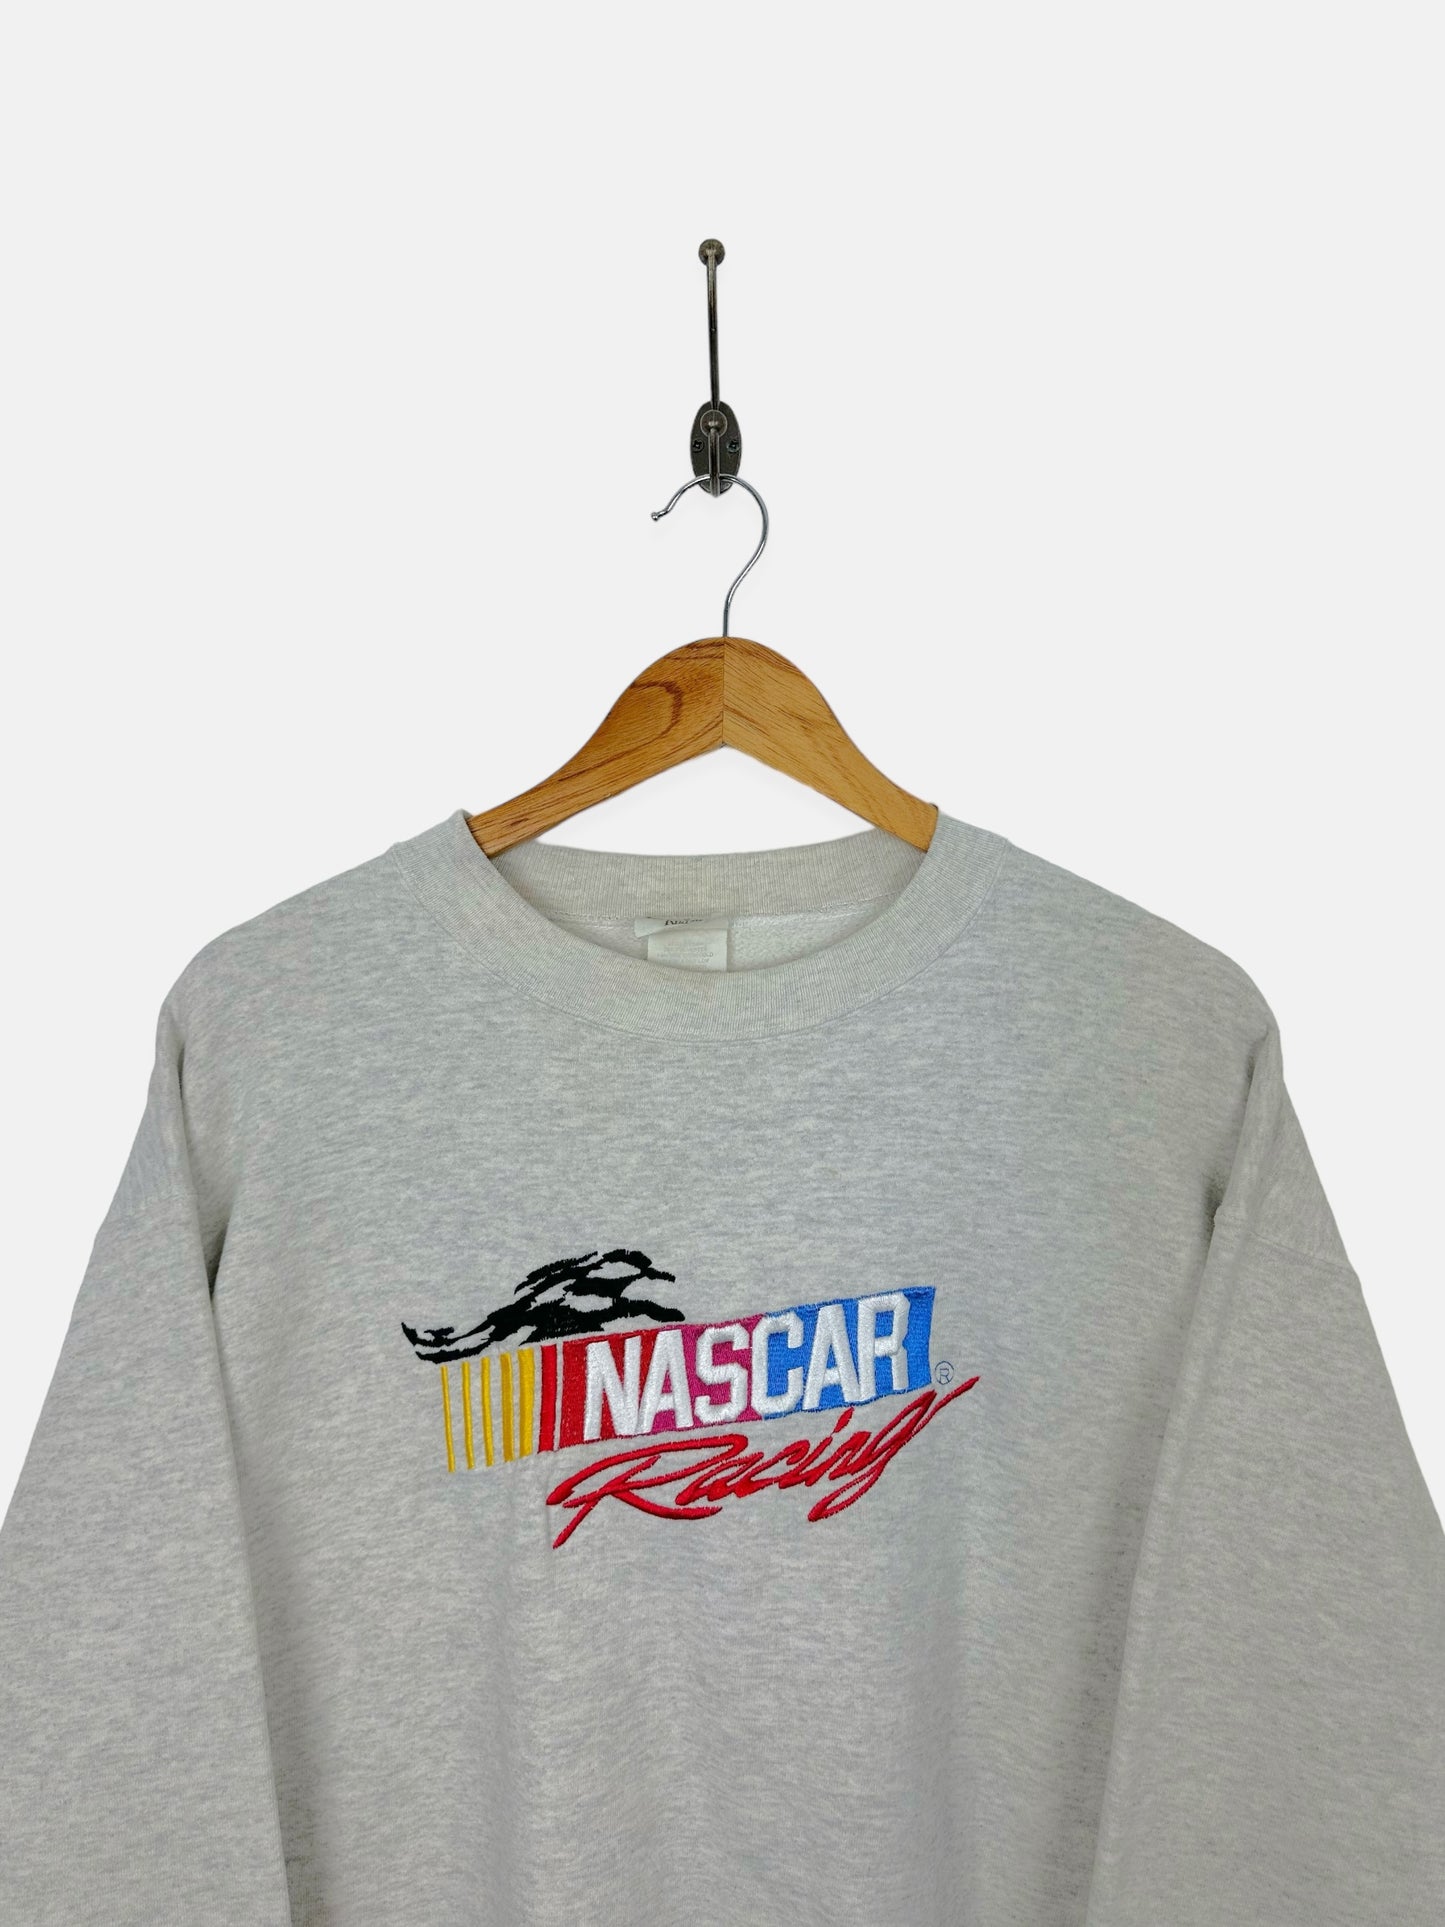 90's Nascar Racing Embroidered Vintage Sweatshirt Size M